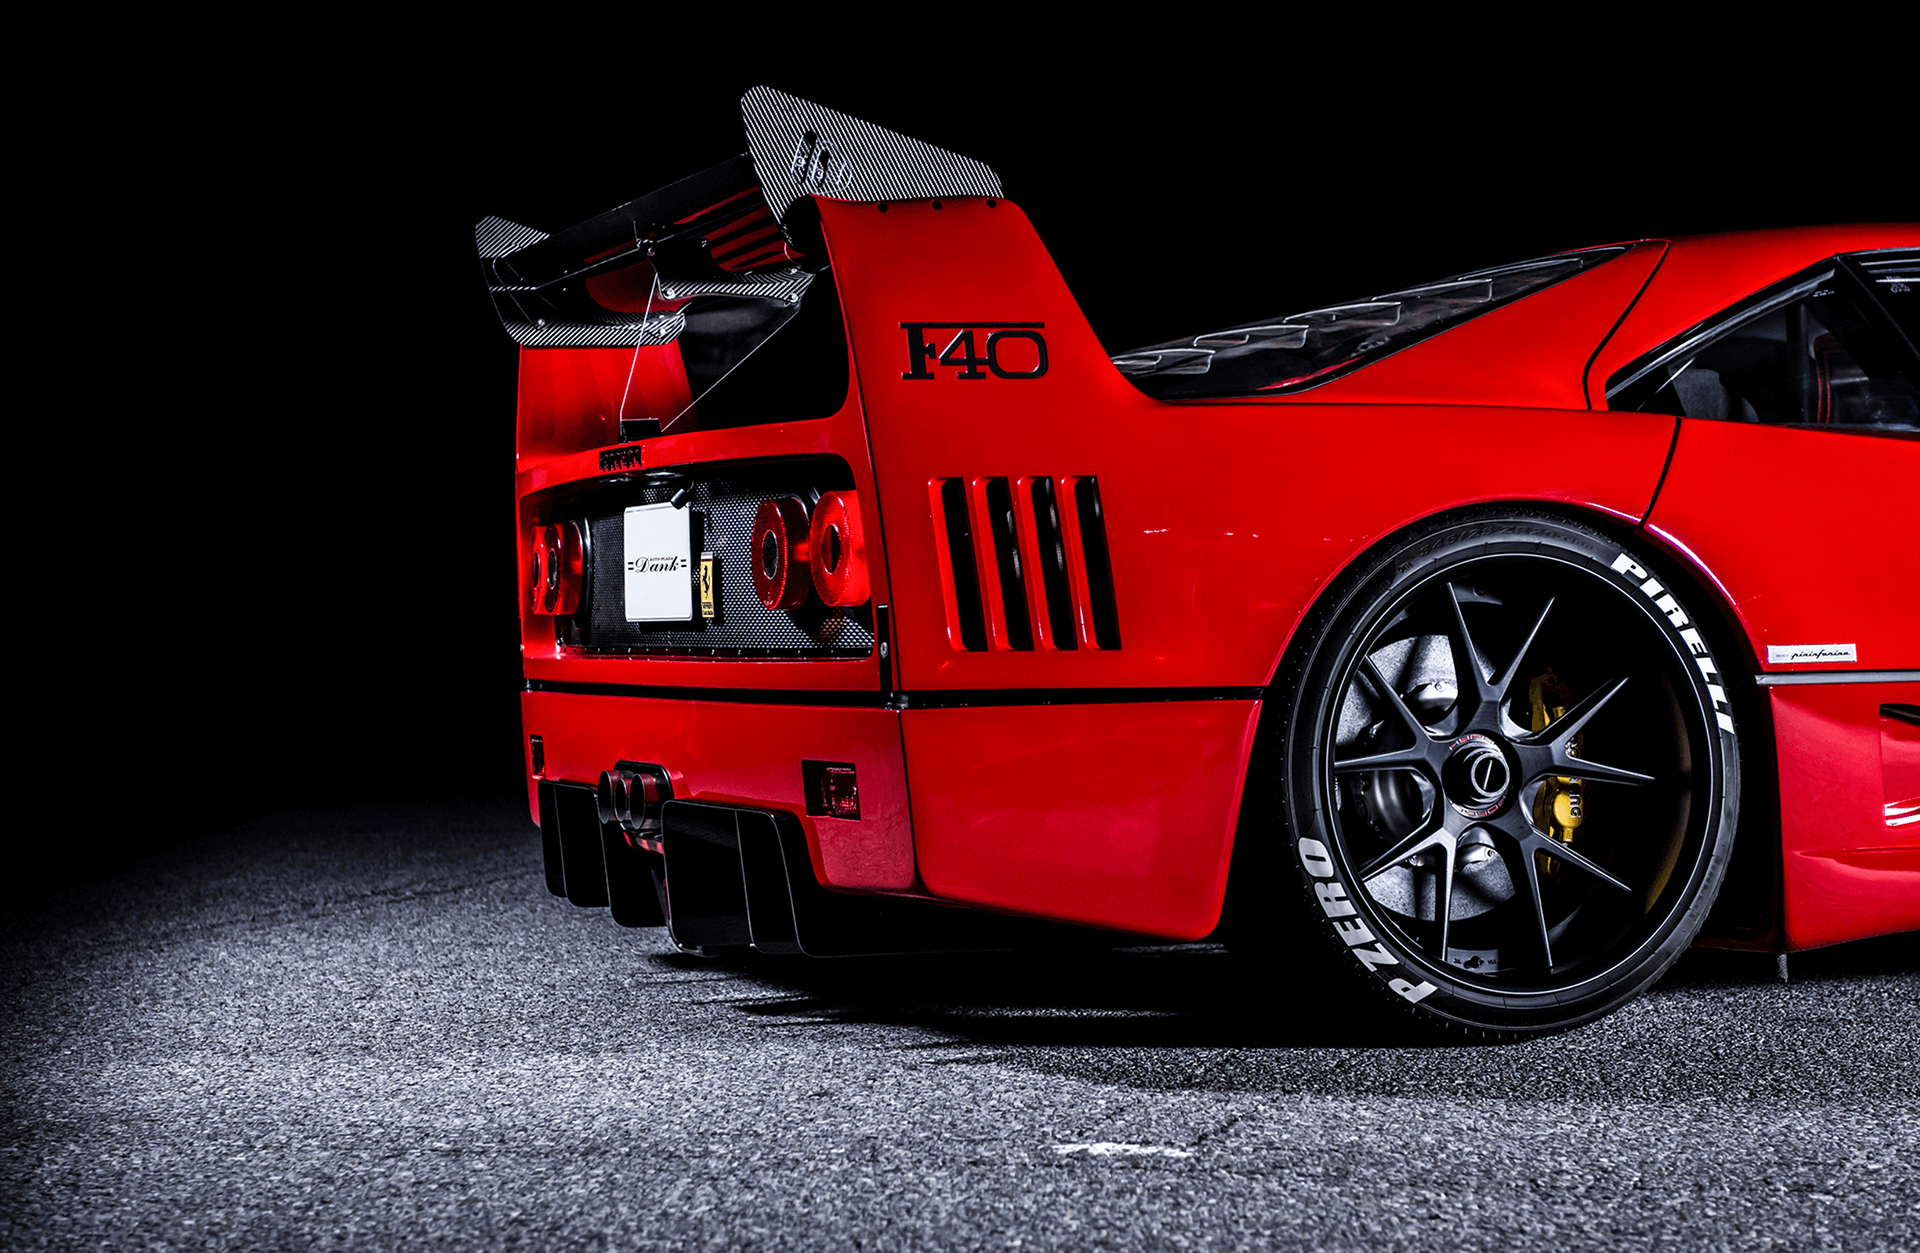 A red Ferrari F40 hypercar